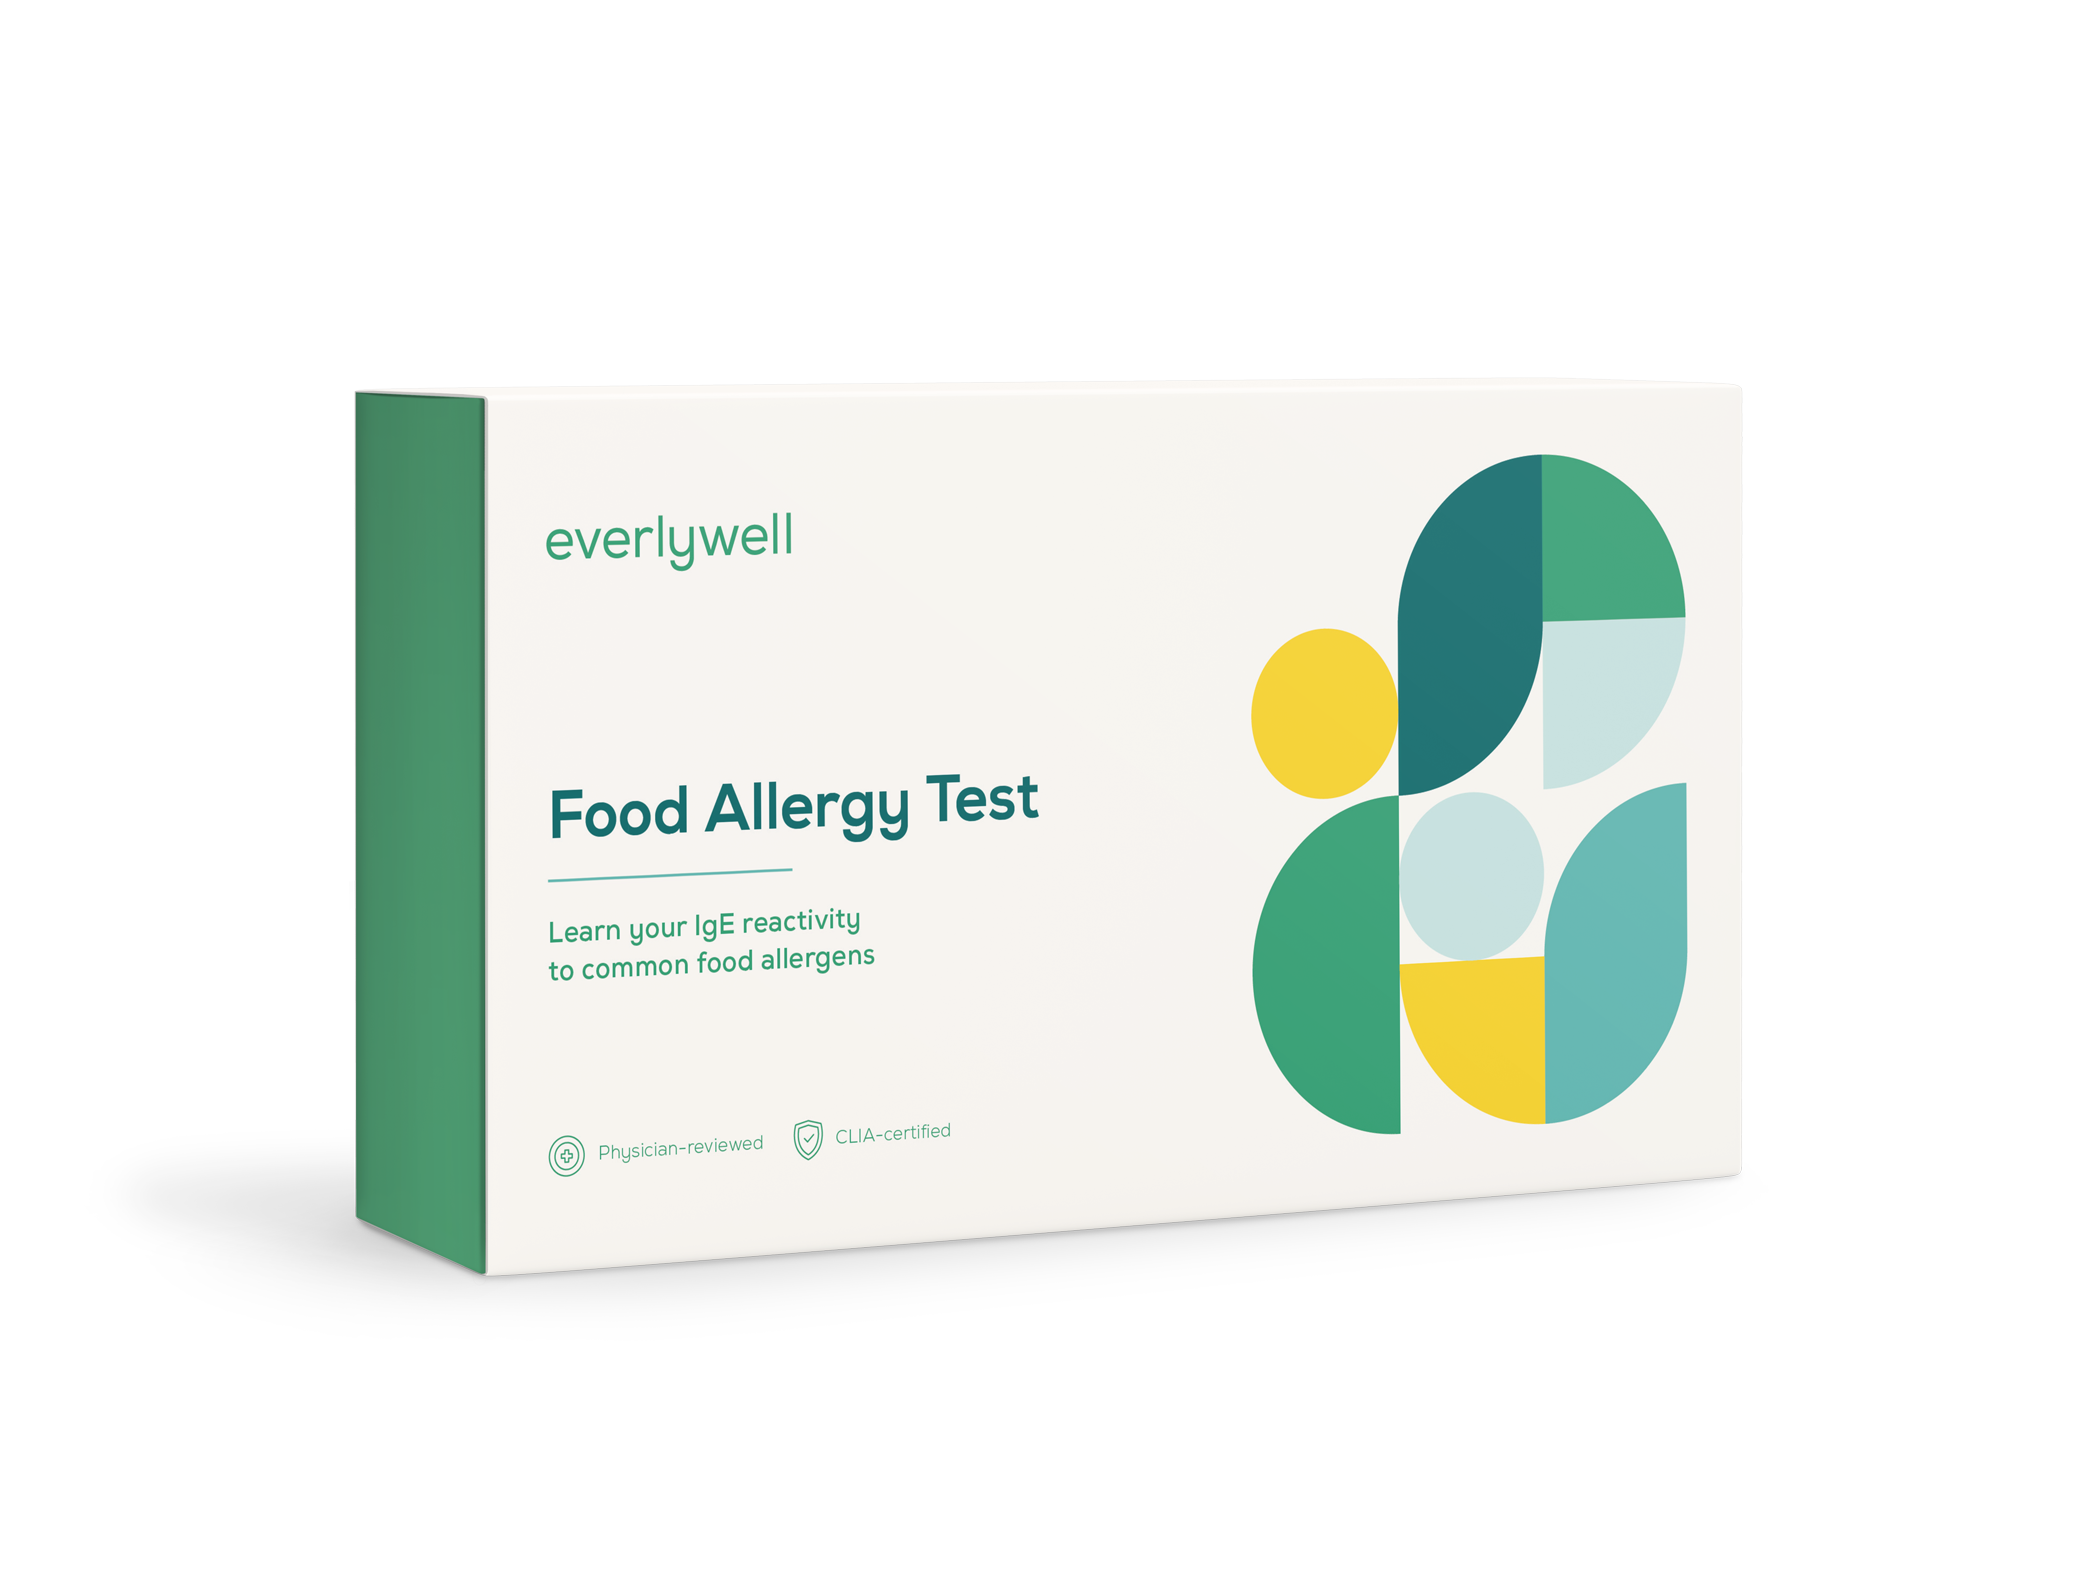 Food Allergy Test box image